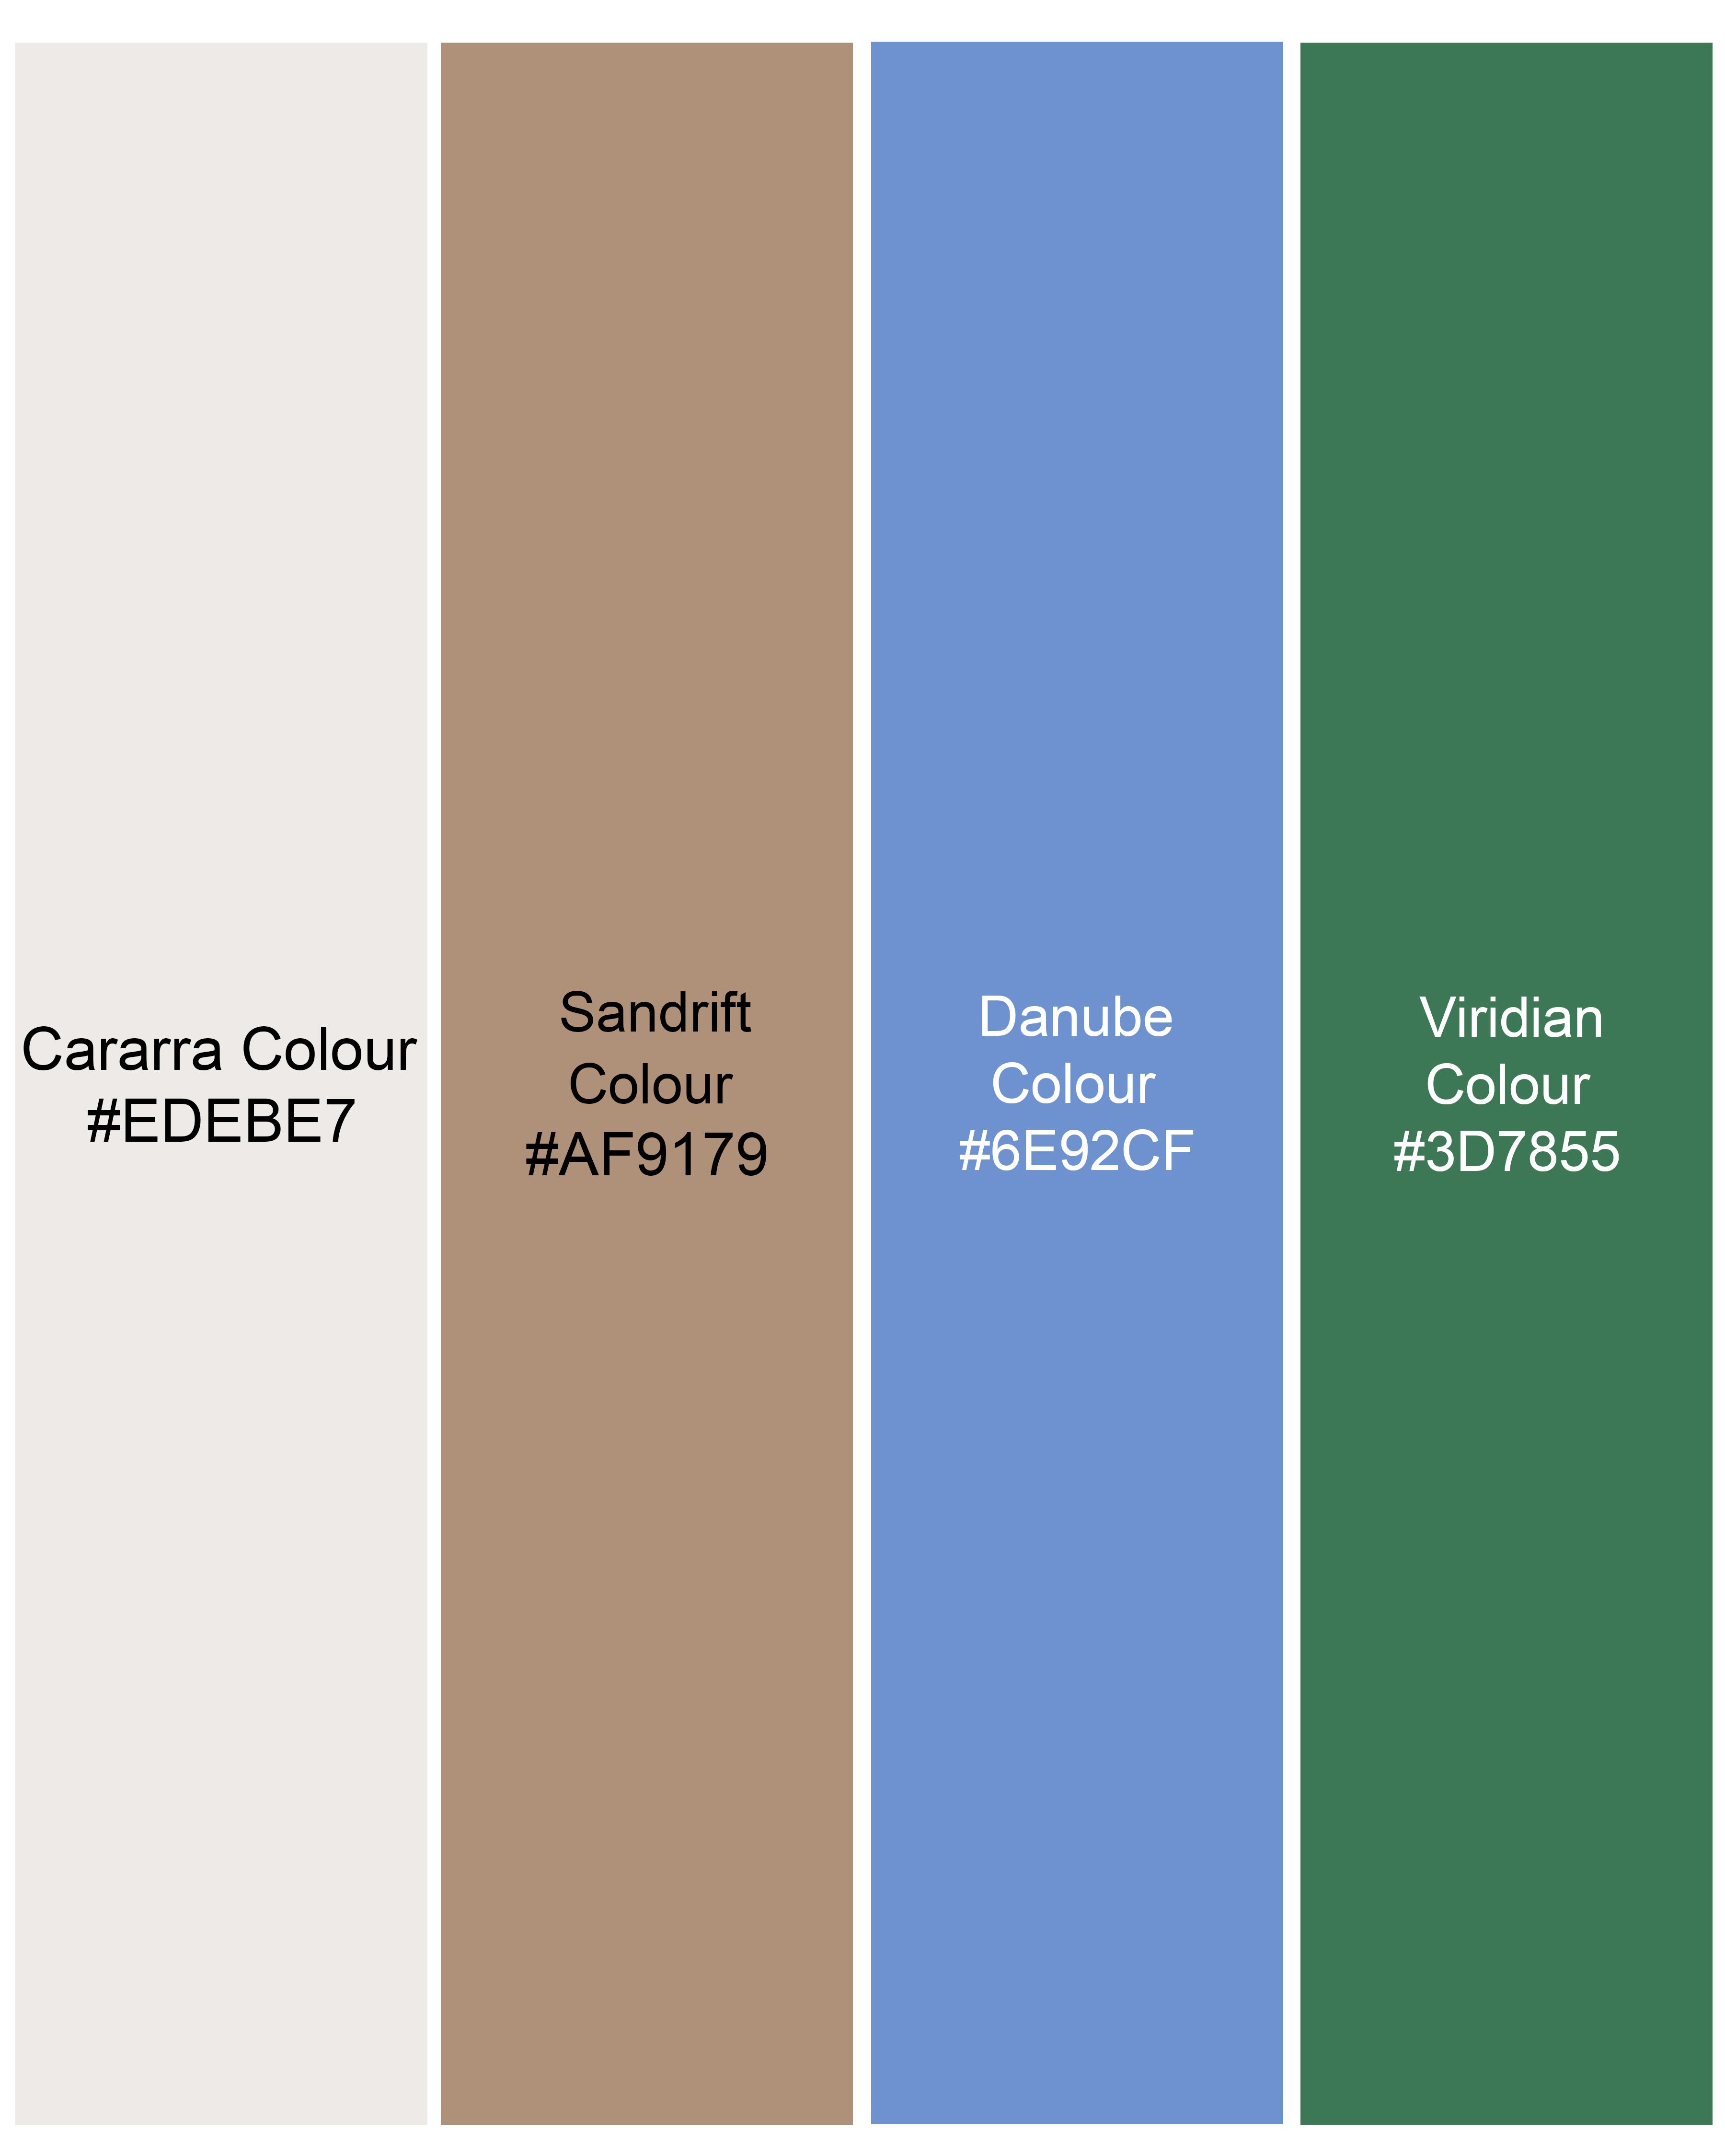 Cararra Cream Multicoloured Ditsy Printed Premium Cotton Shorts SR237-28, SR237-30, SR237-32, SR237-34, SR237-36, SR237-38, SR237-40, SR237-42, SR237-44